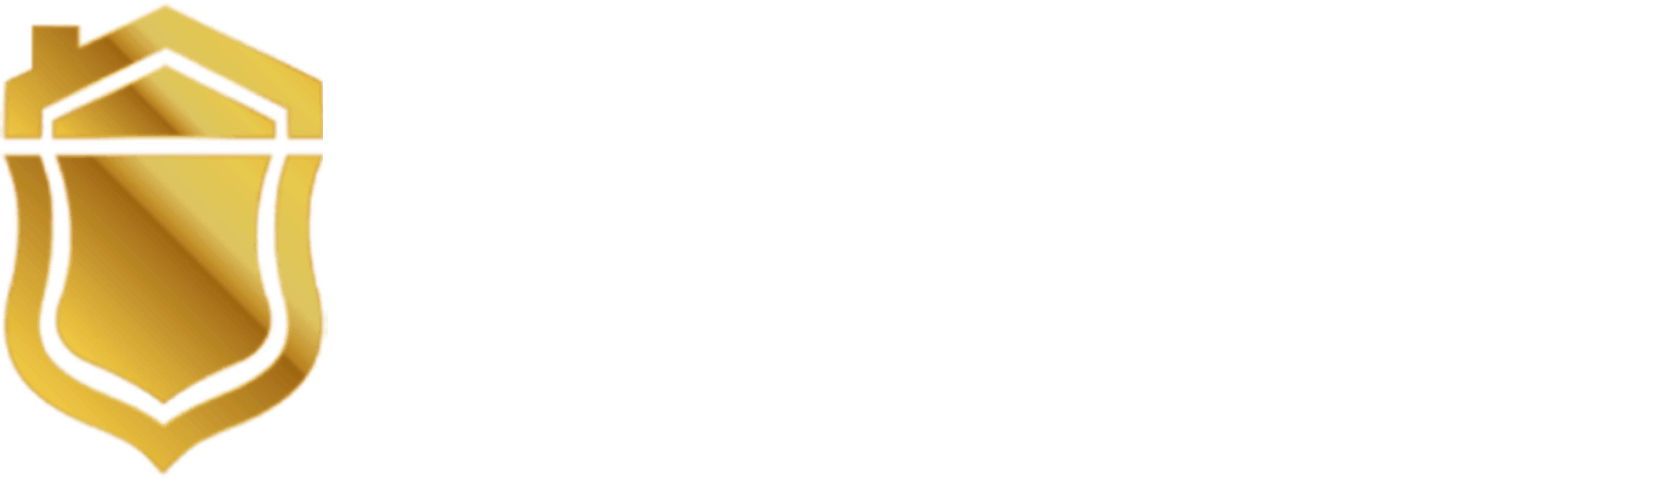 Shield Management- logo